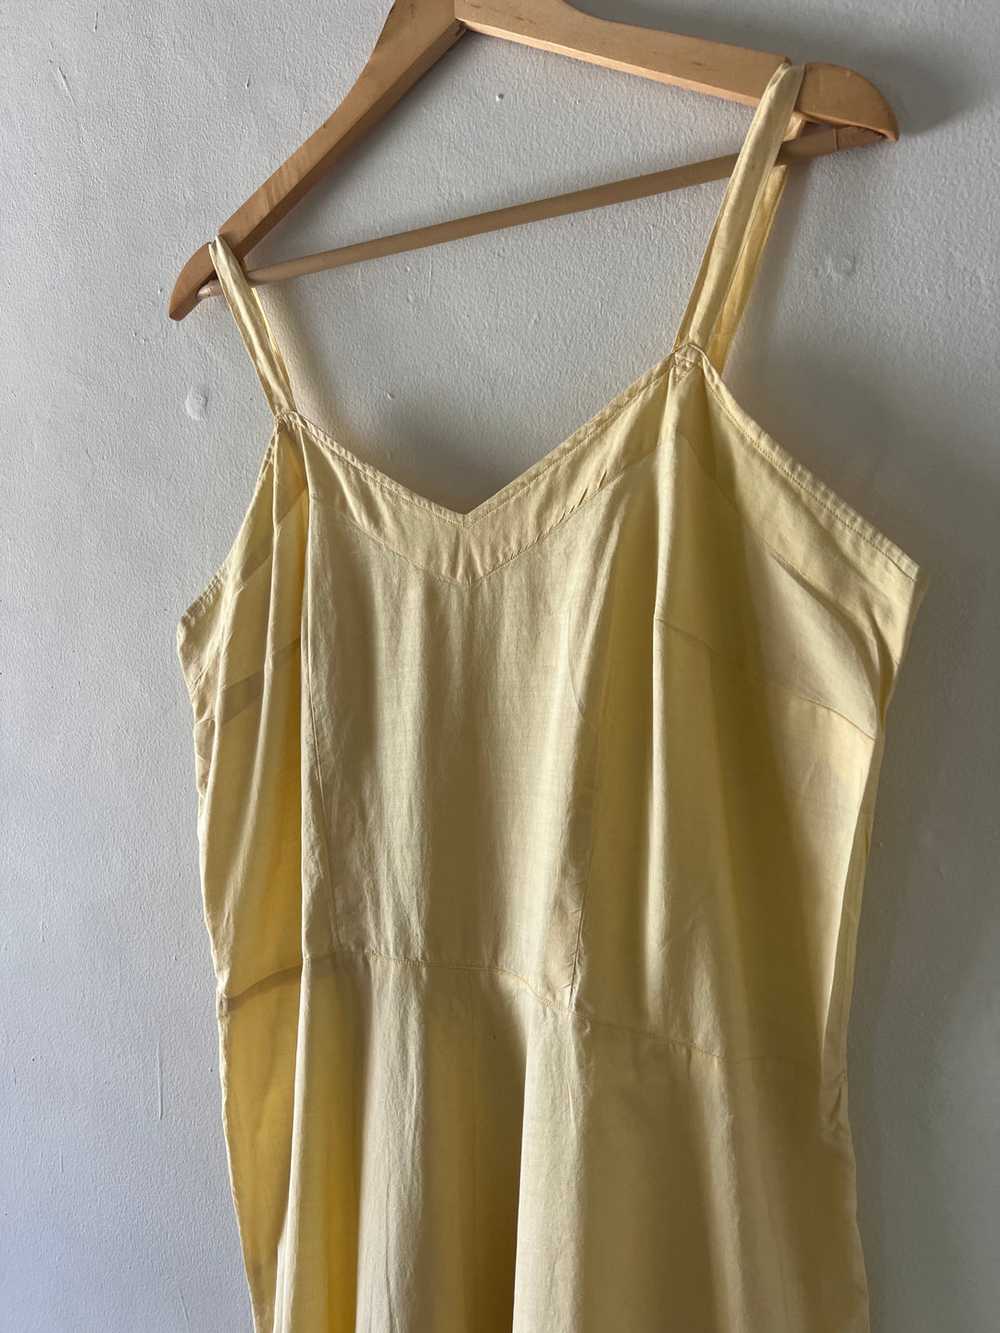 Vintage Cotton Yellow Dress (L) - image 5